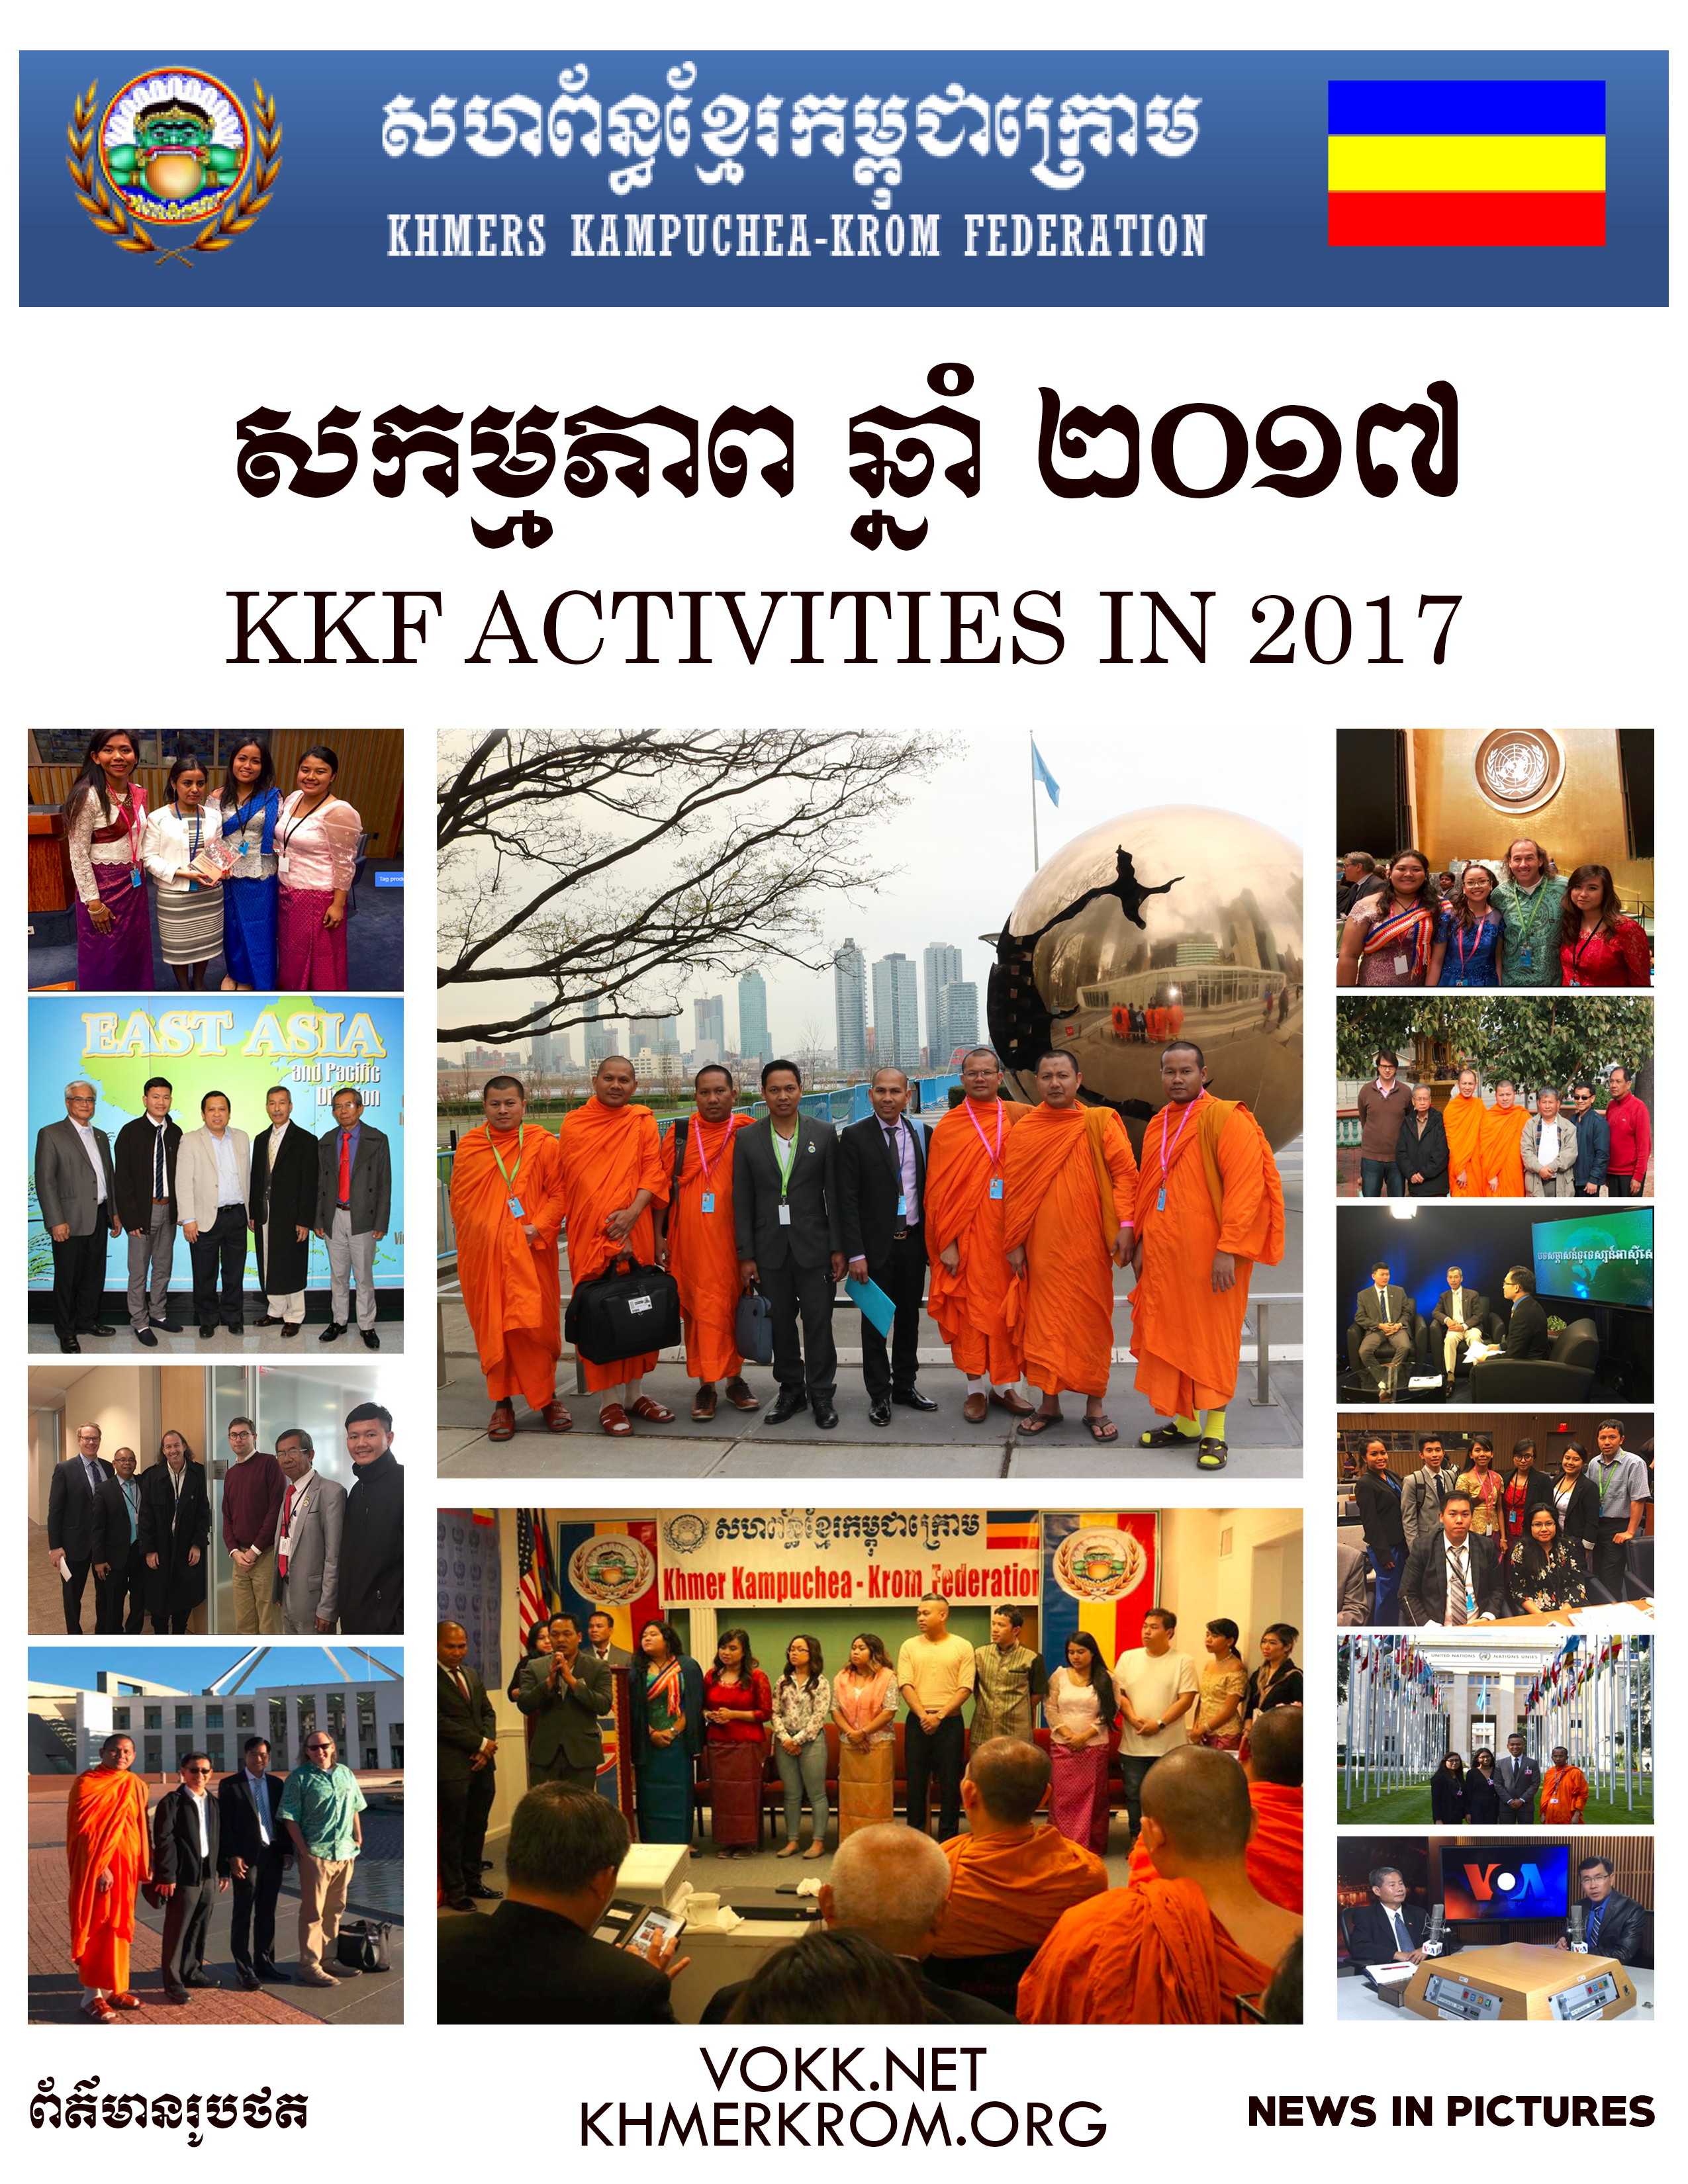 kkf activities 2017